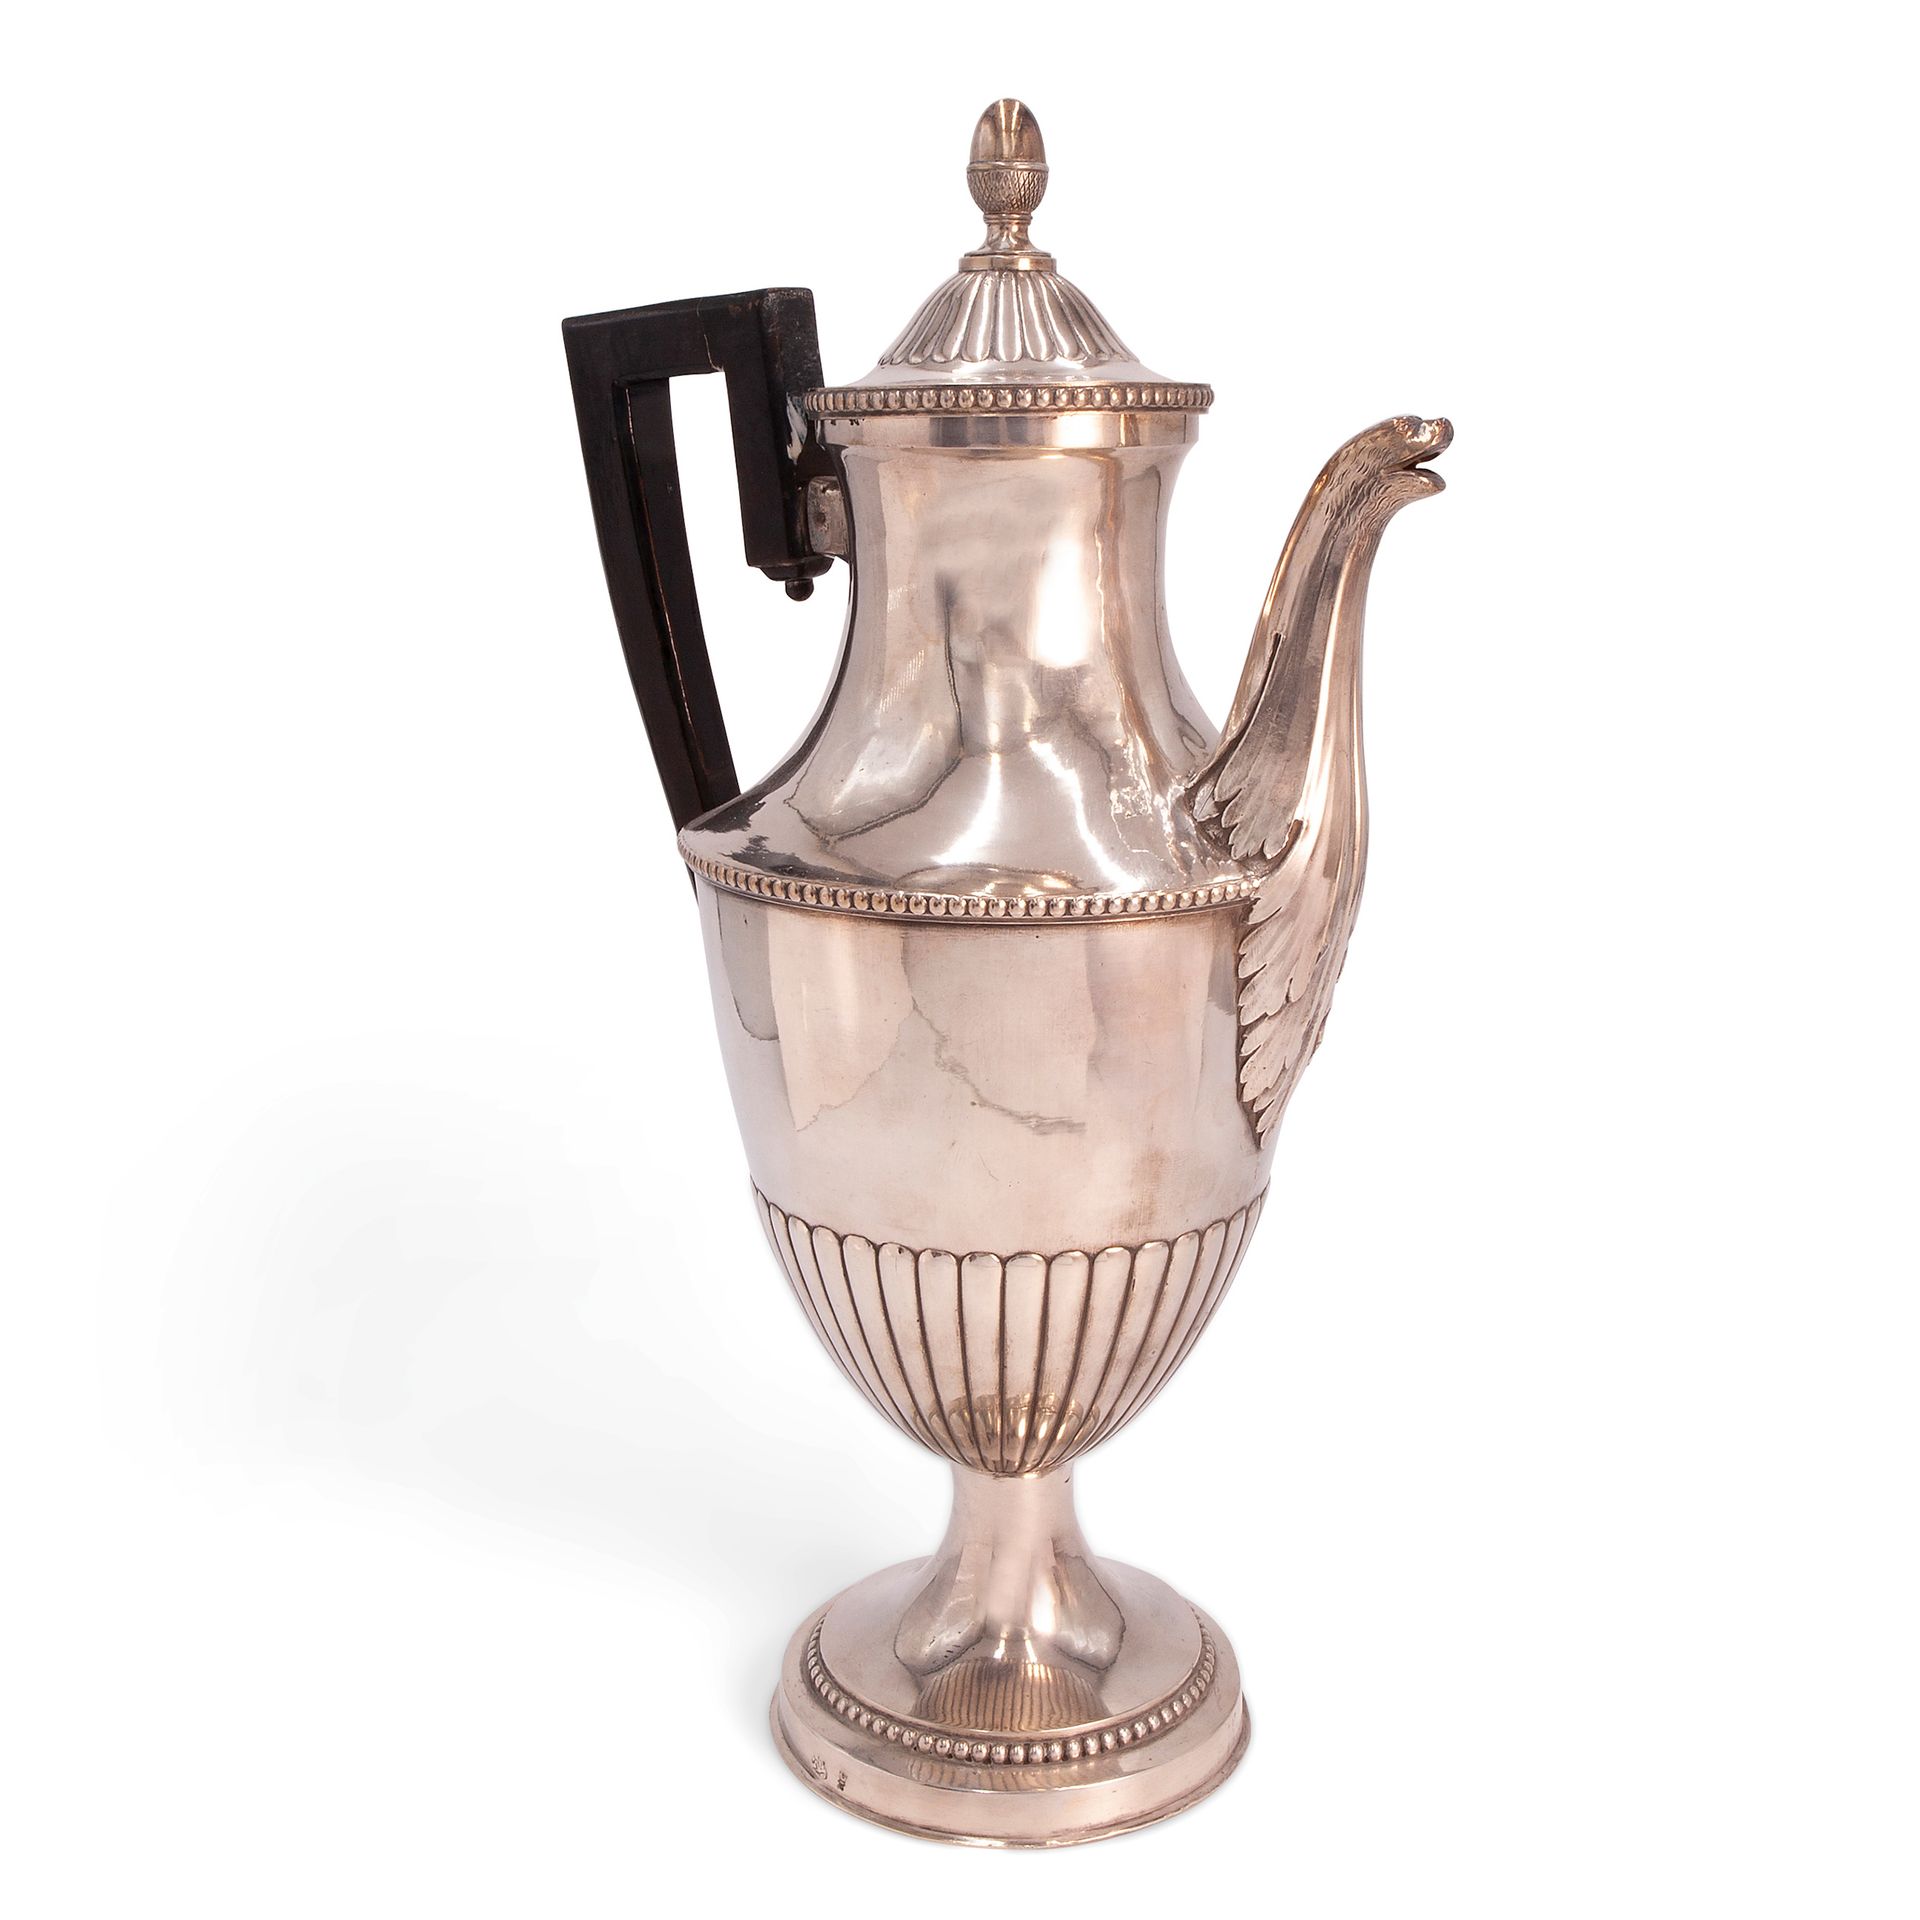 Genoese silver coffee pot 新古典主义时期制造 总重量29.3盎司，12.9x7.8x5.9英寸。